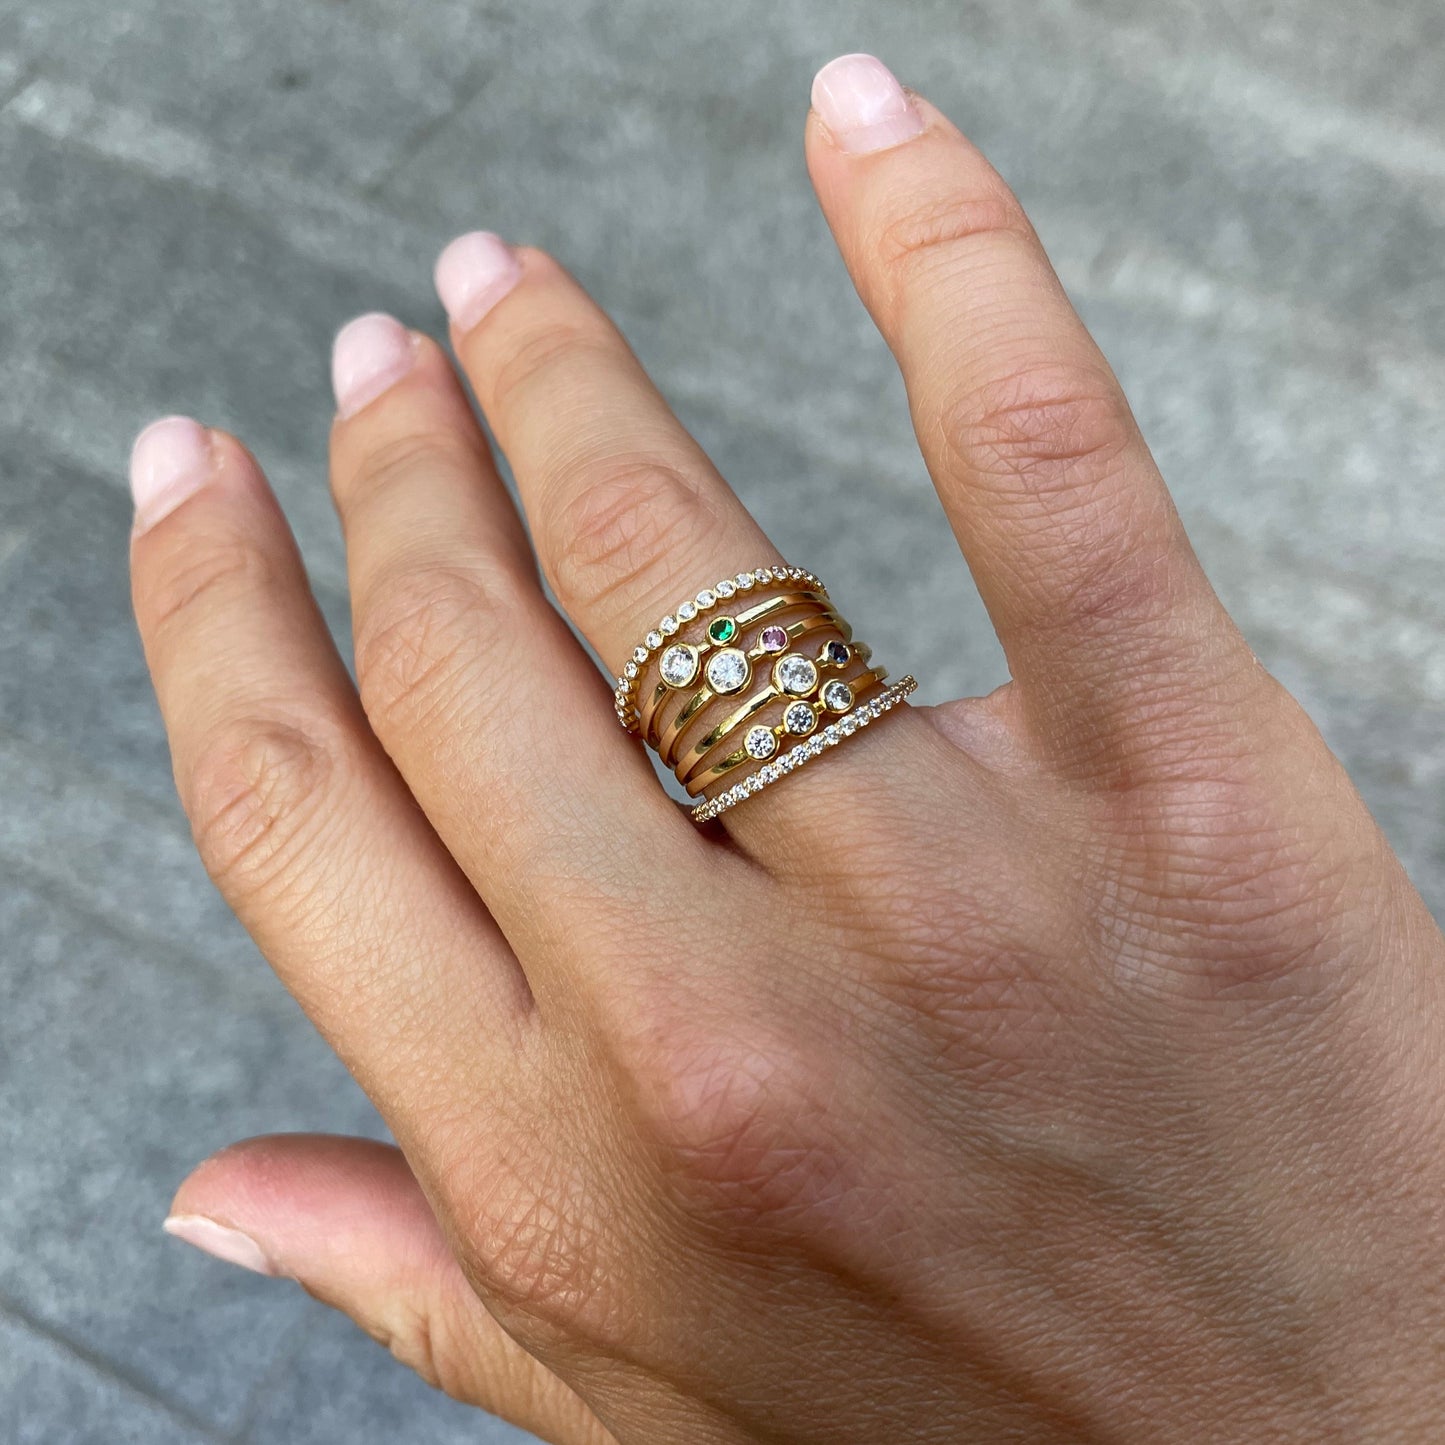 "Eliza" Stackable Pavé Diamond Eternity Ring - - Jewelry - Goldie Paris Jewelry - Ring stackable